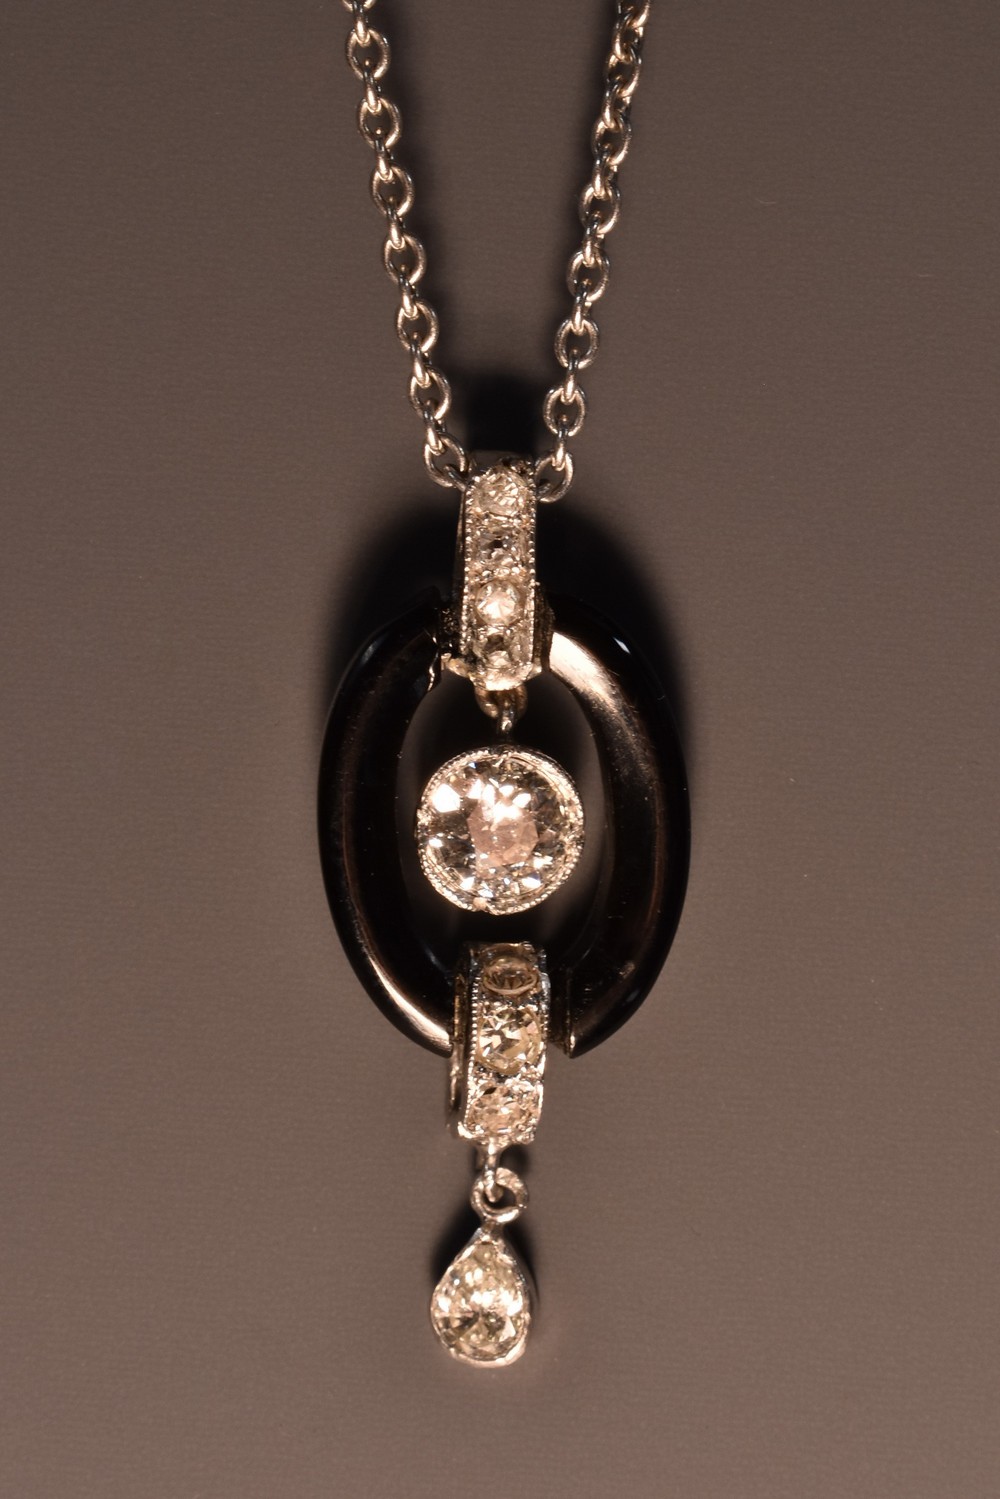 A diamond and black onyx pendant necklace,